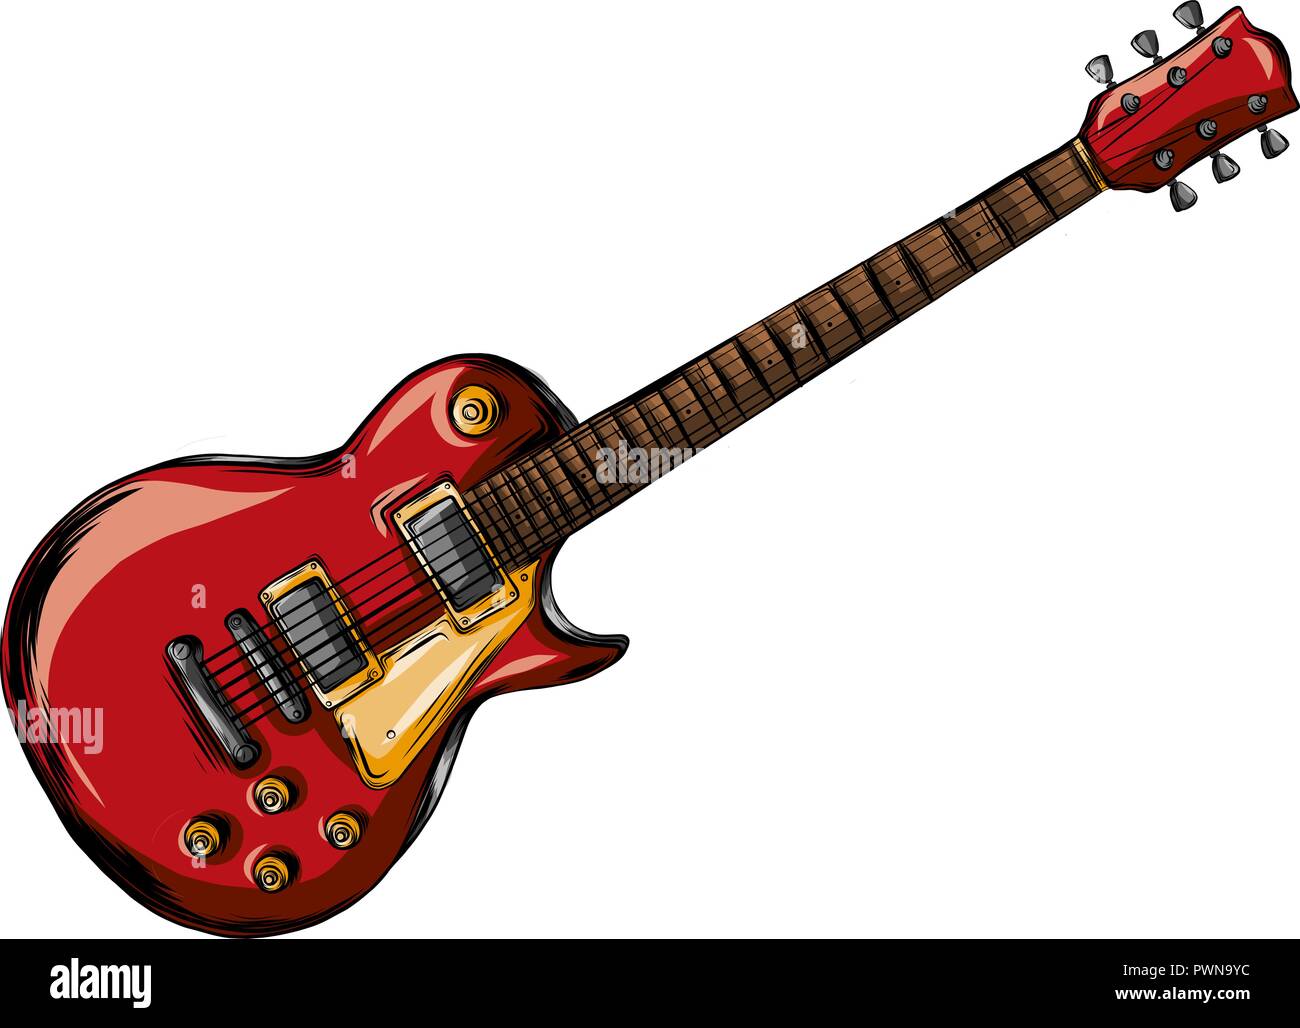 E-Gitarre flachbild Vector Illustration. Rock Musik Instrument Stock Vektor